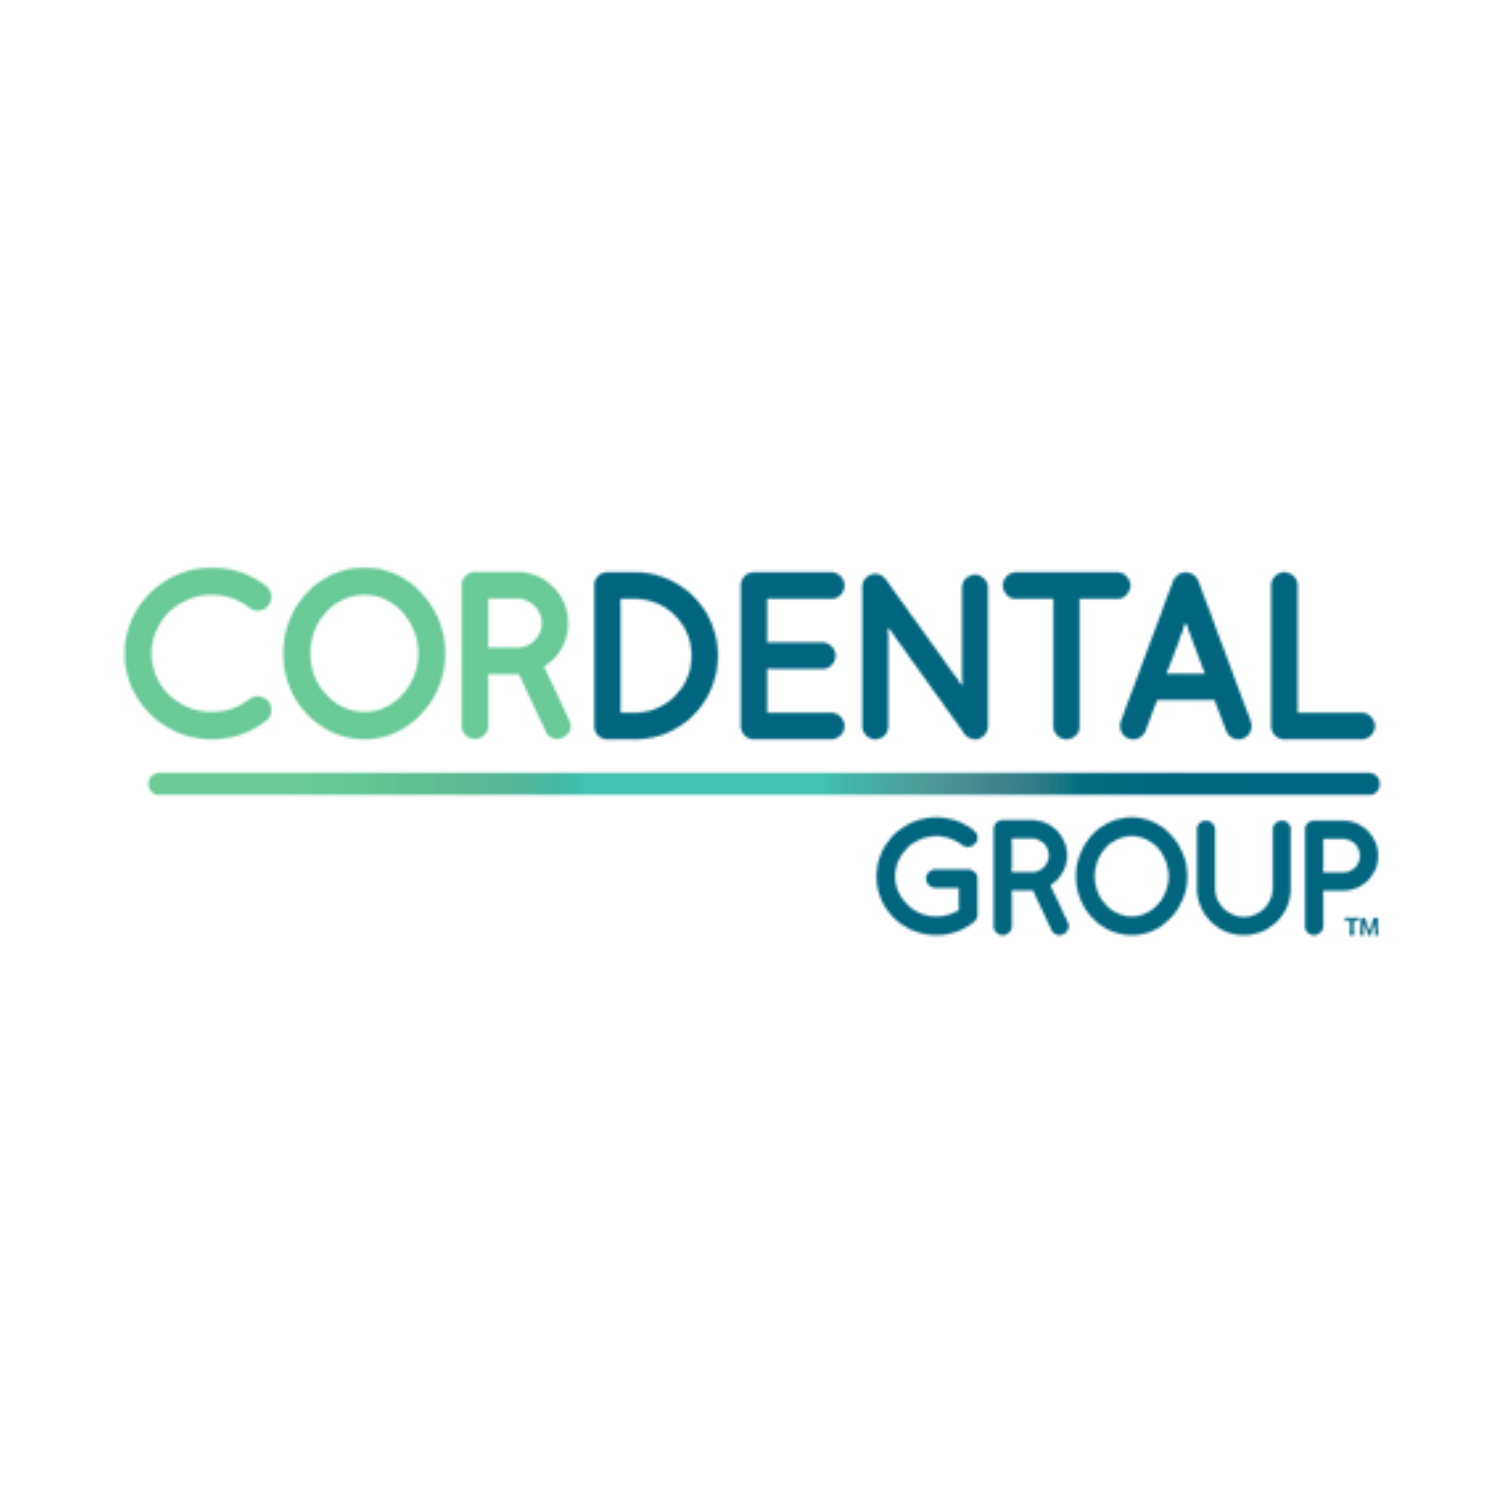 core dental group logo no background